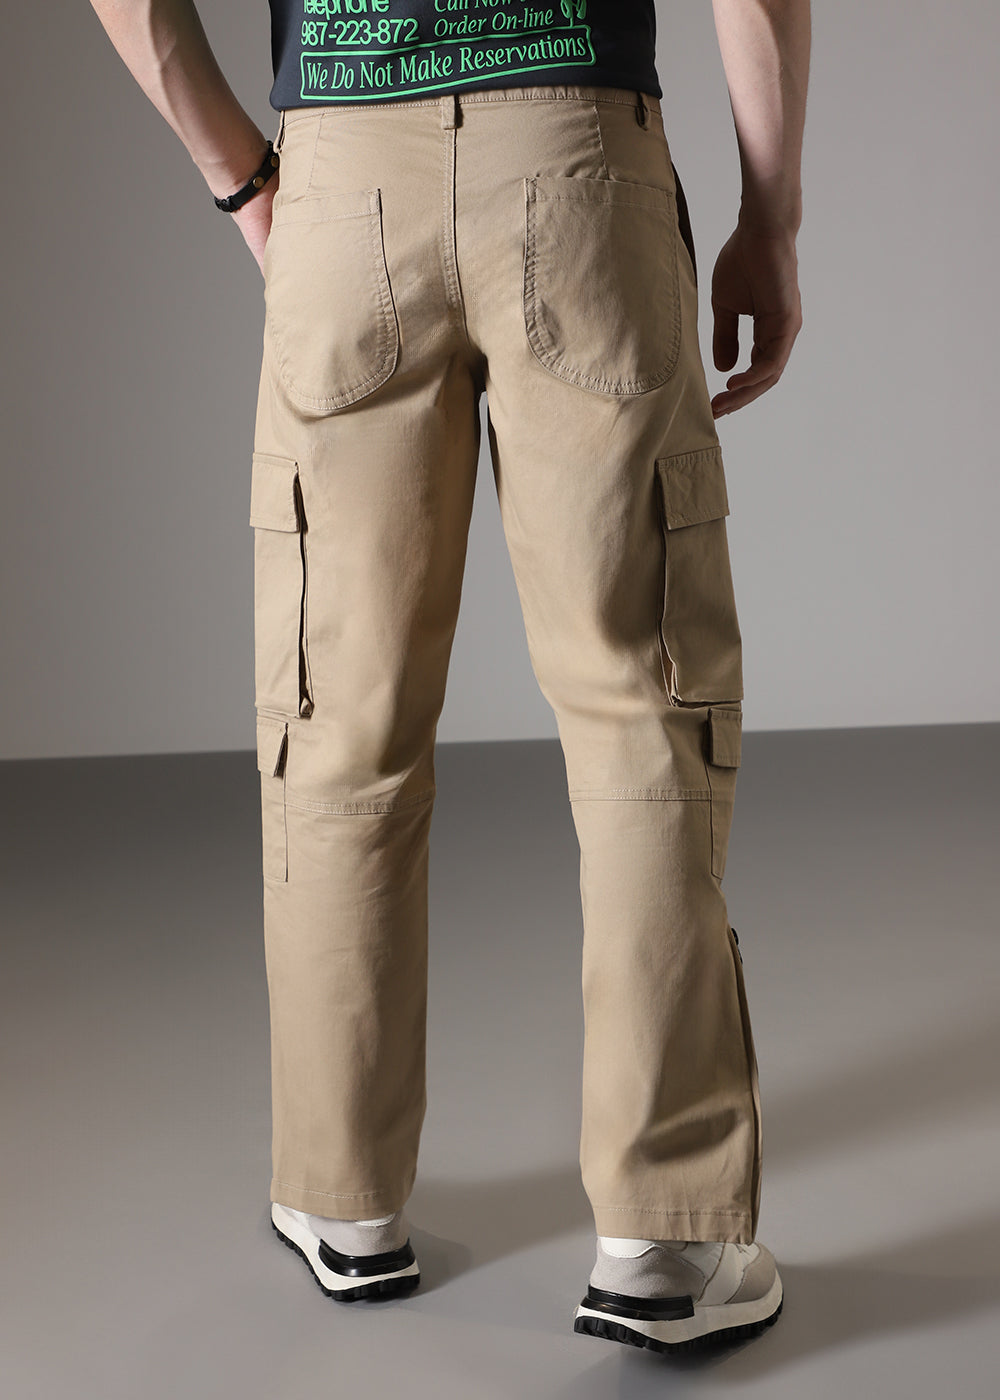 Sepia Brown Zipper Cargo Pant